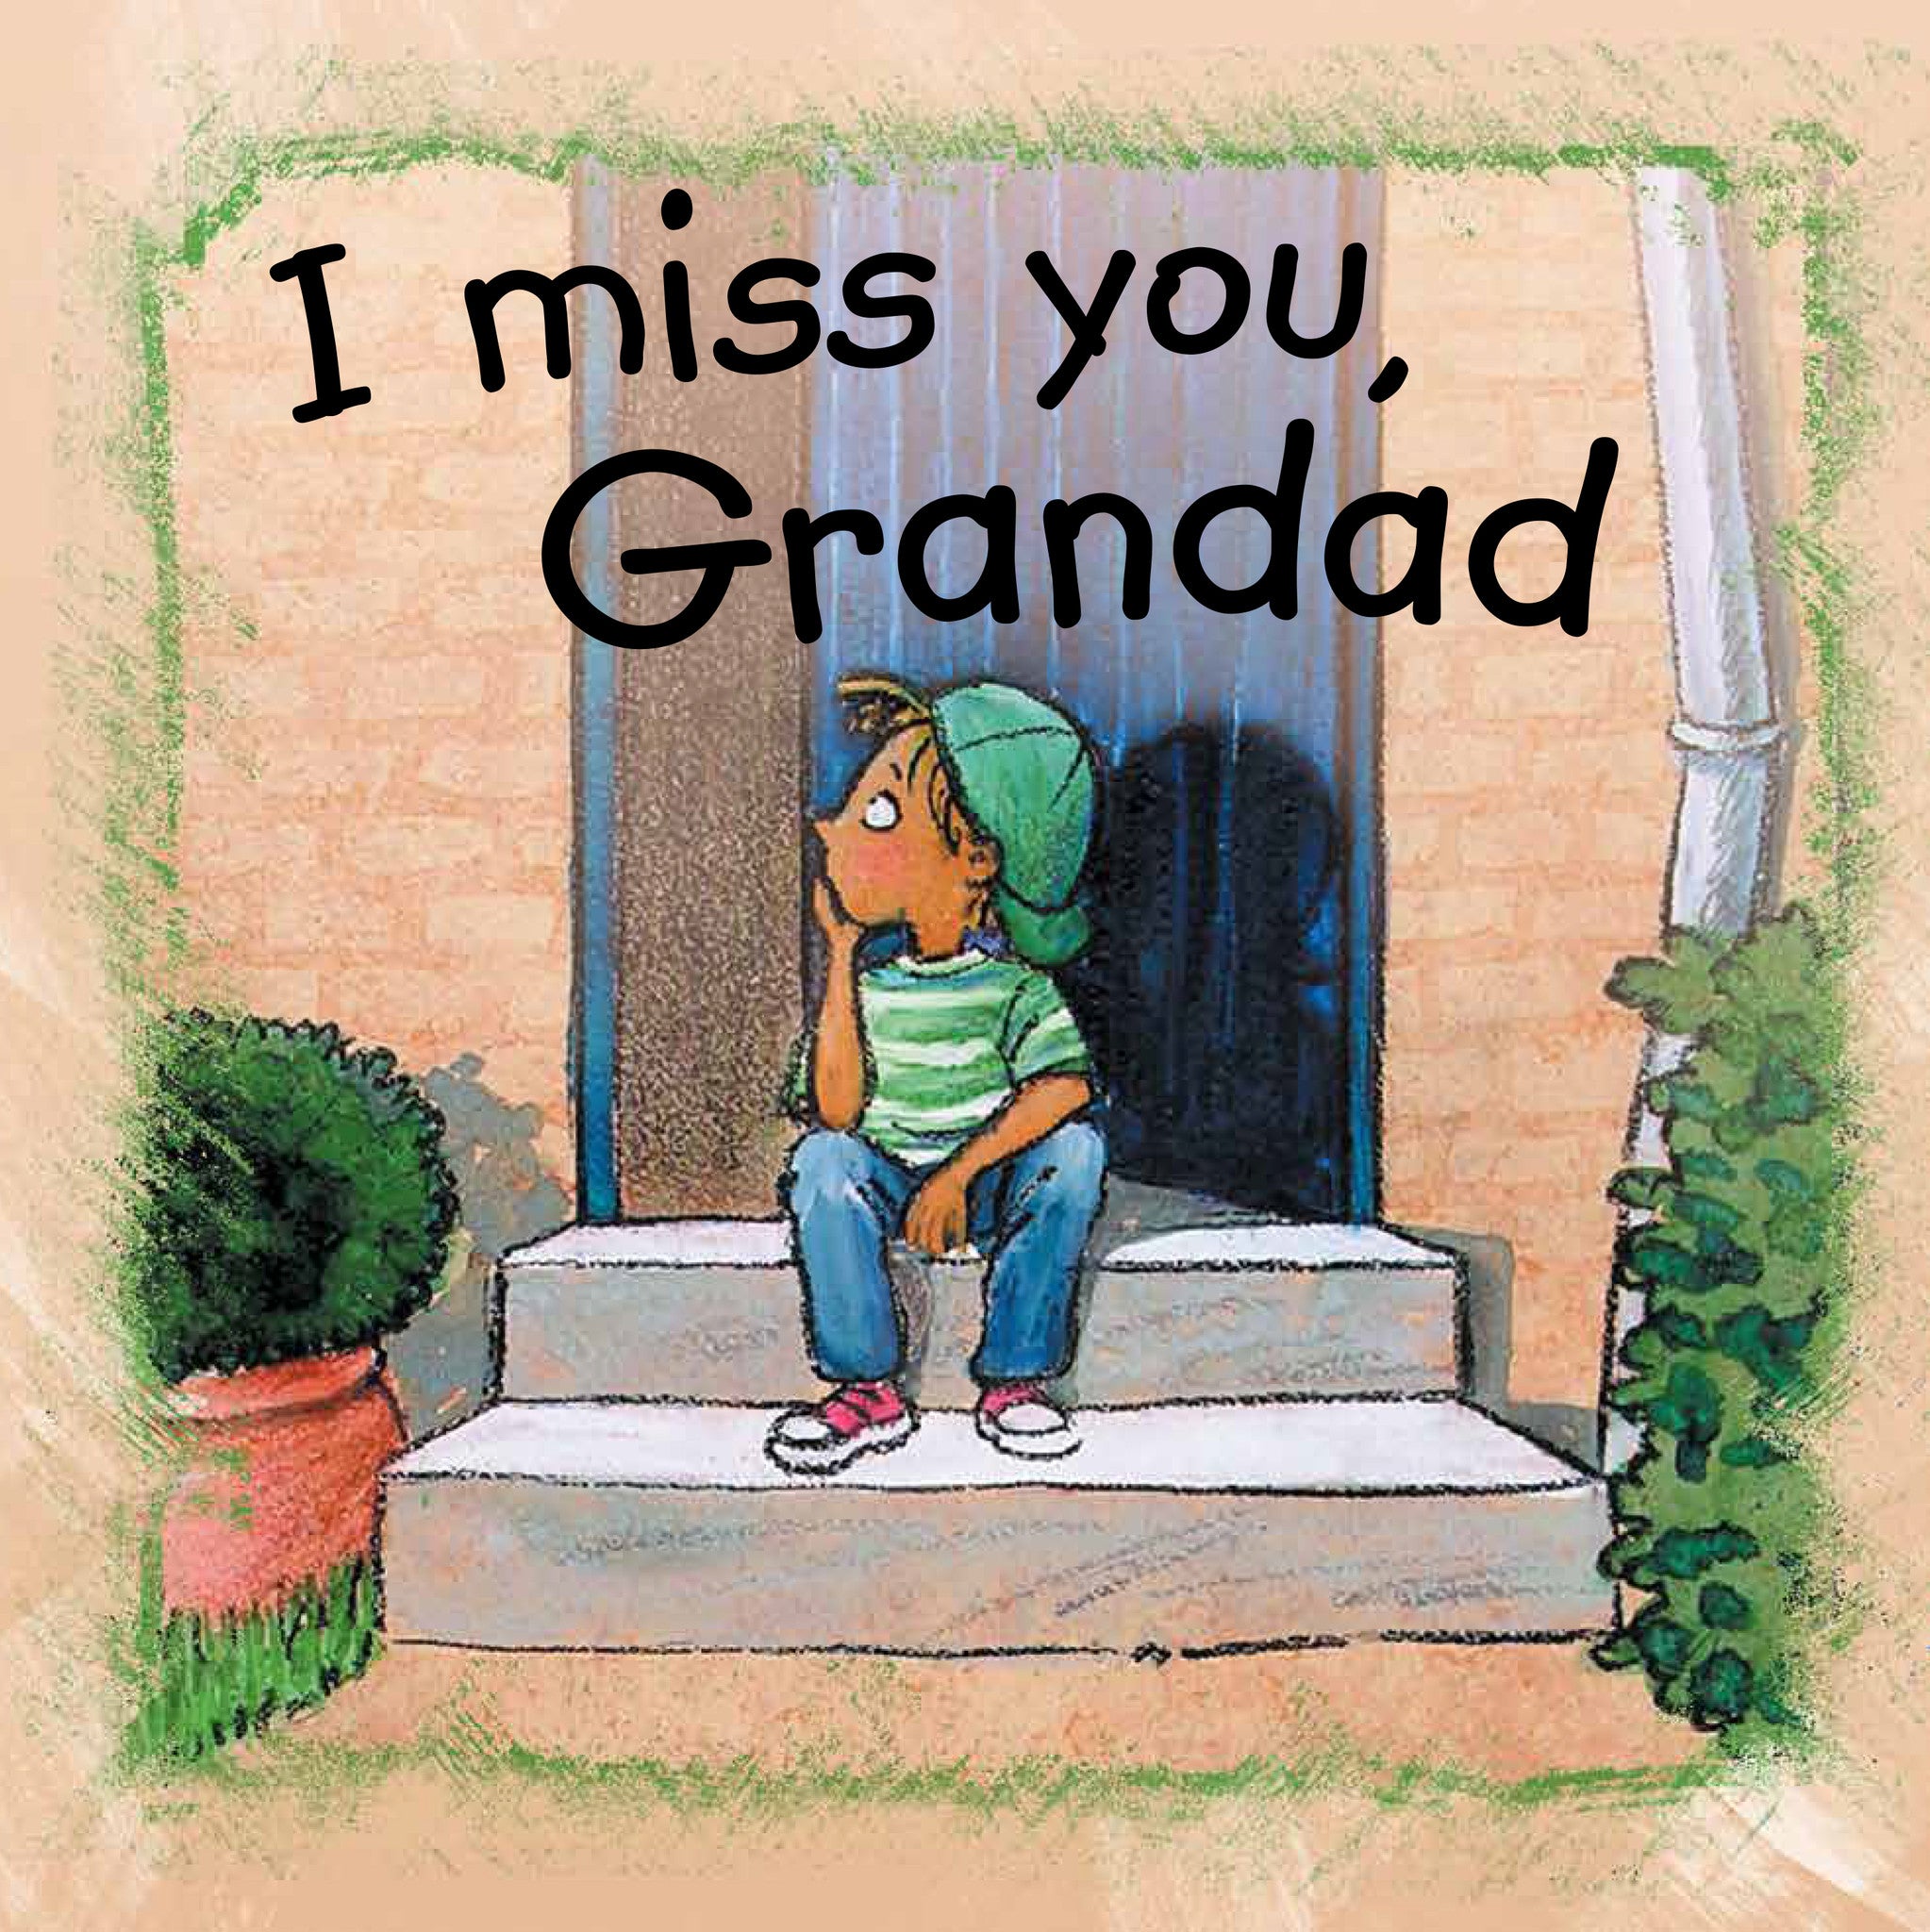 I miss you, Grandad